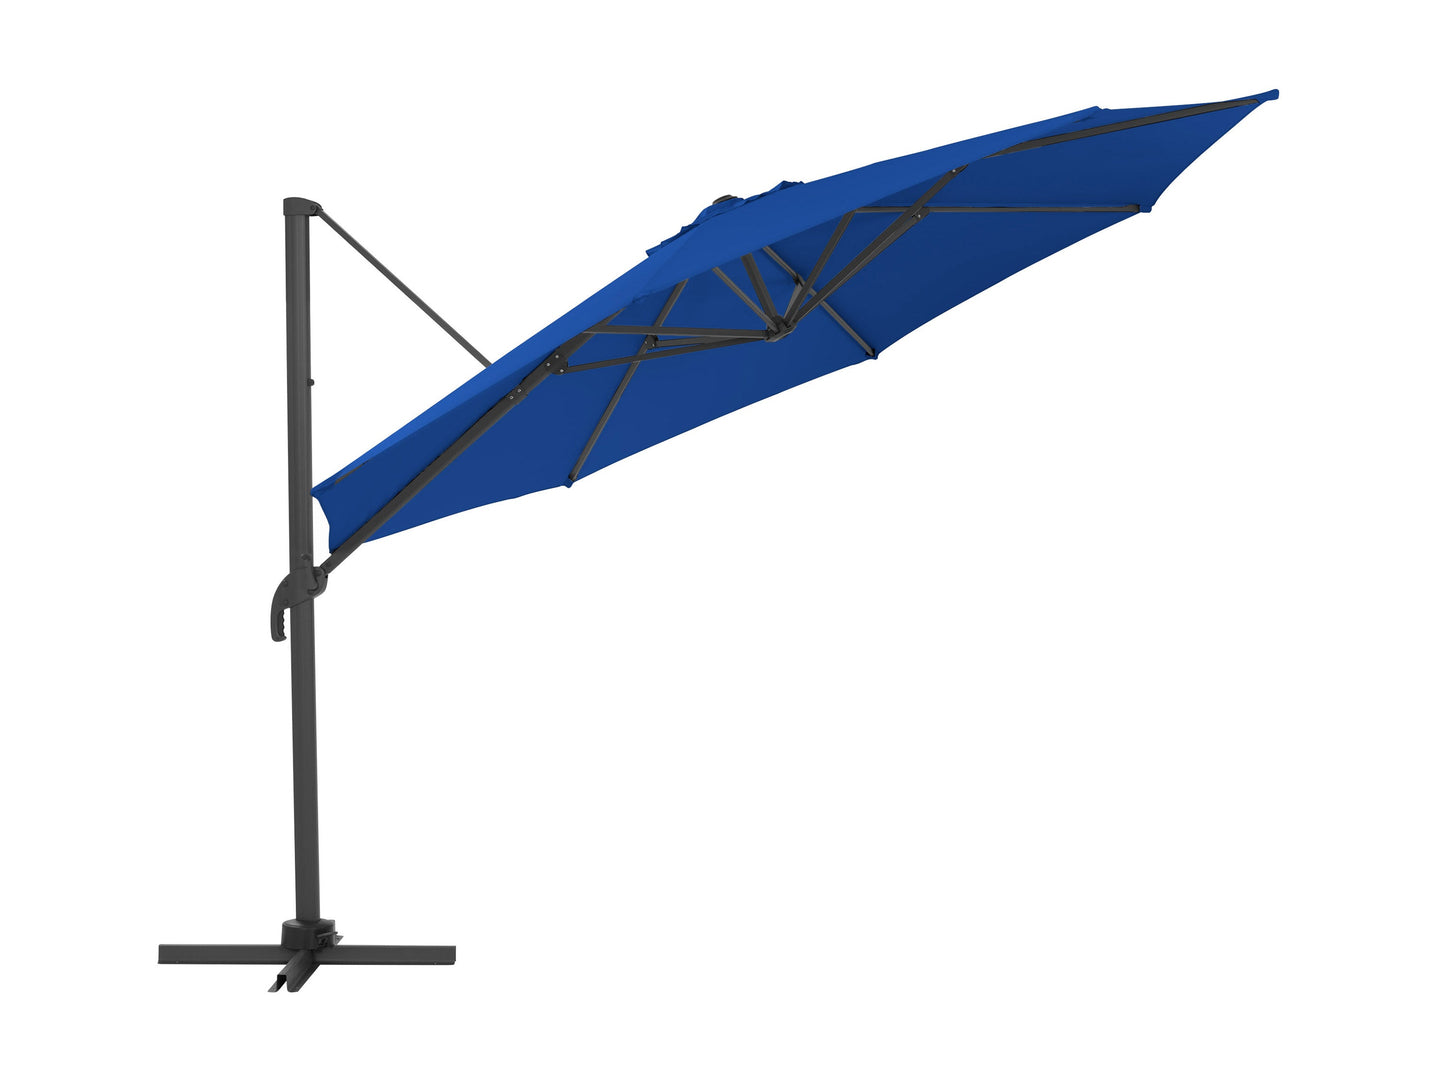 cobalt blue deluxe offset patio umbrella 500 Series product image CorLiving#color_cobalt-blue